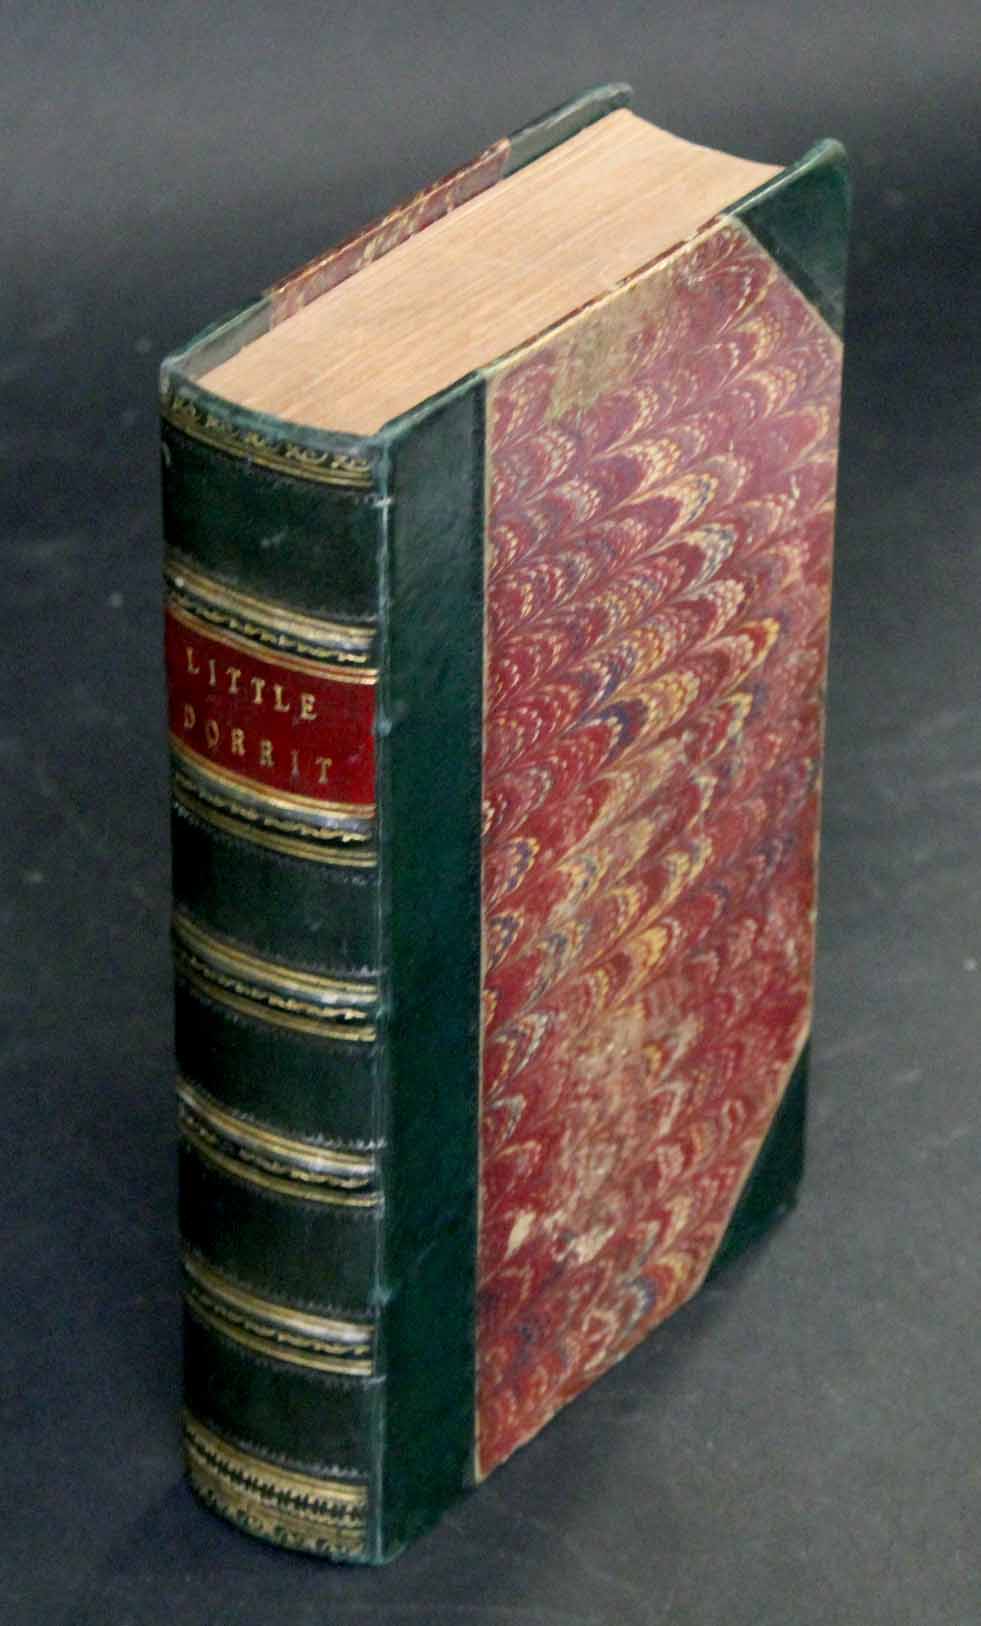 CHARLES DICKENS: LITTLE DORRIT, ill H K Browne, London, Bradbury & Evans, 1857, 1st edition in - Image 2 of 3